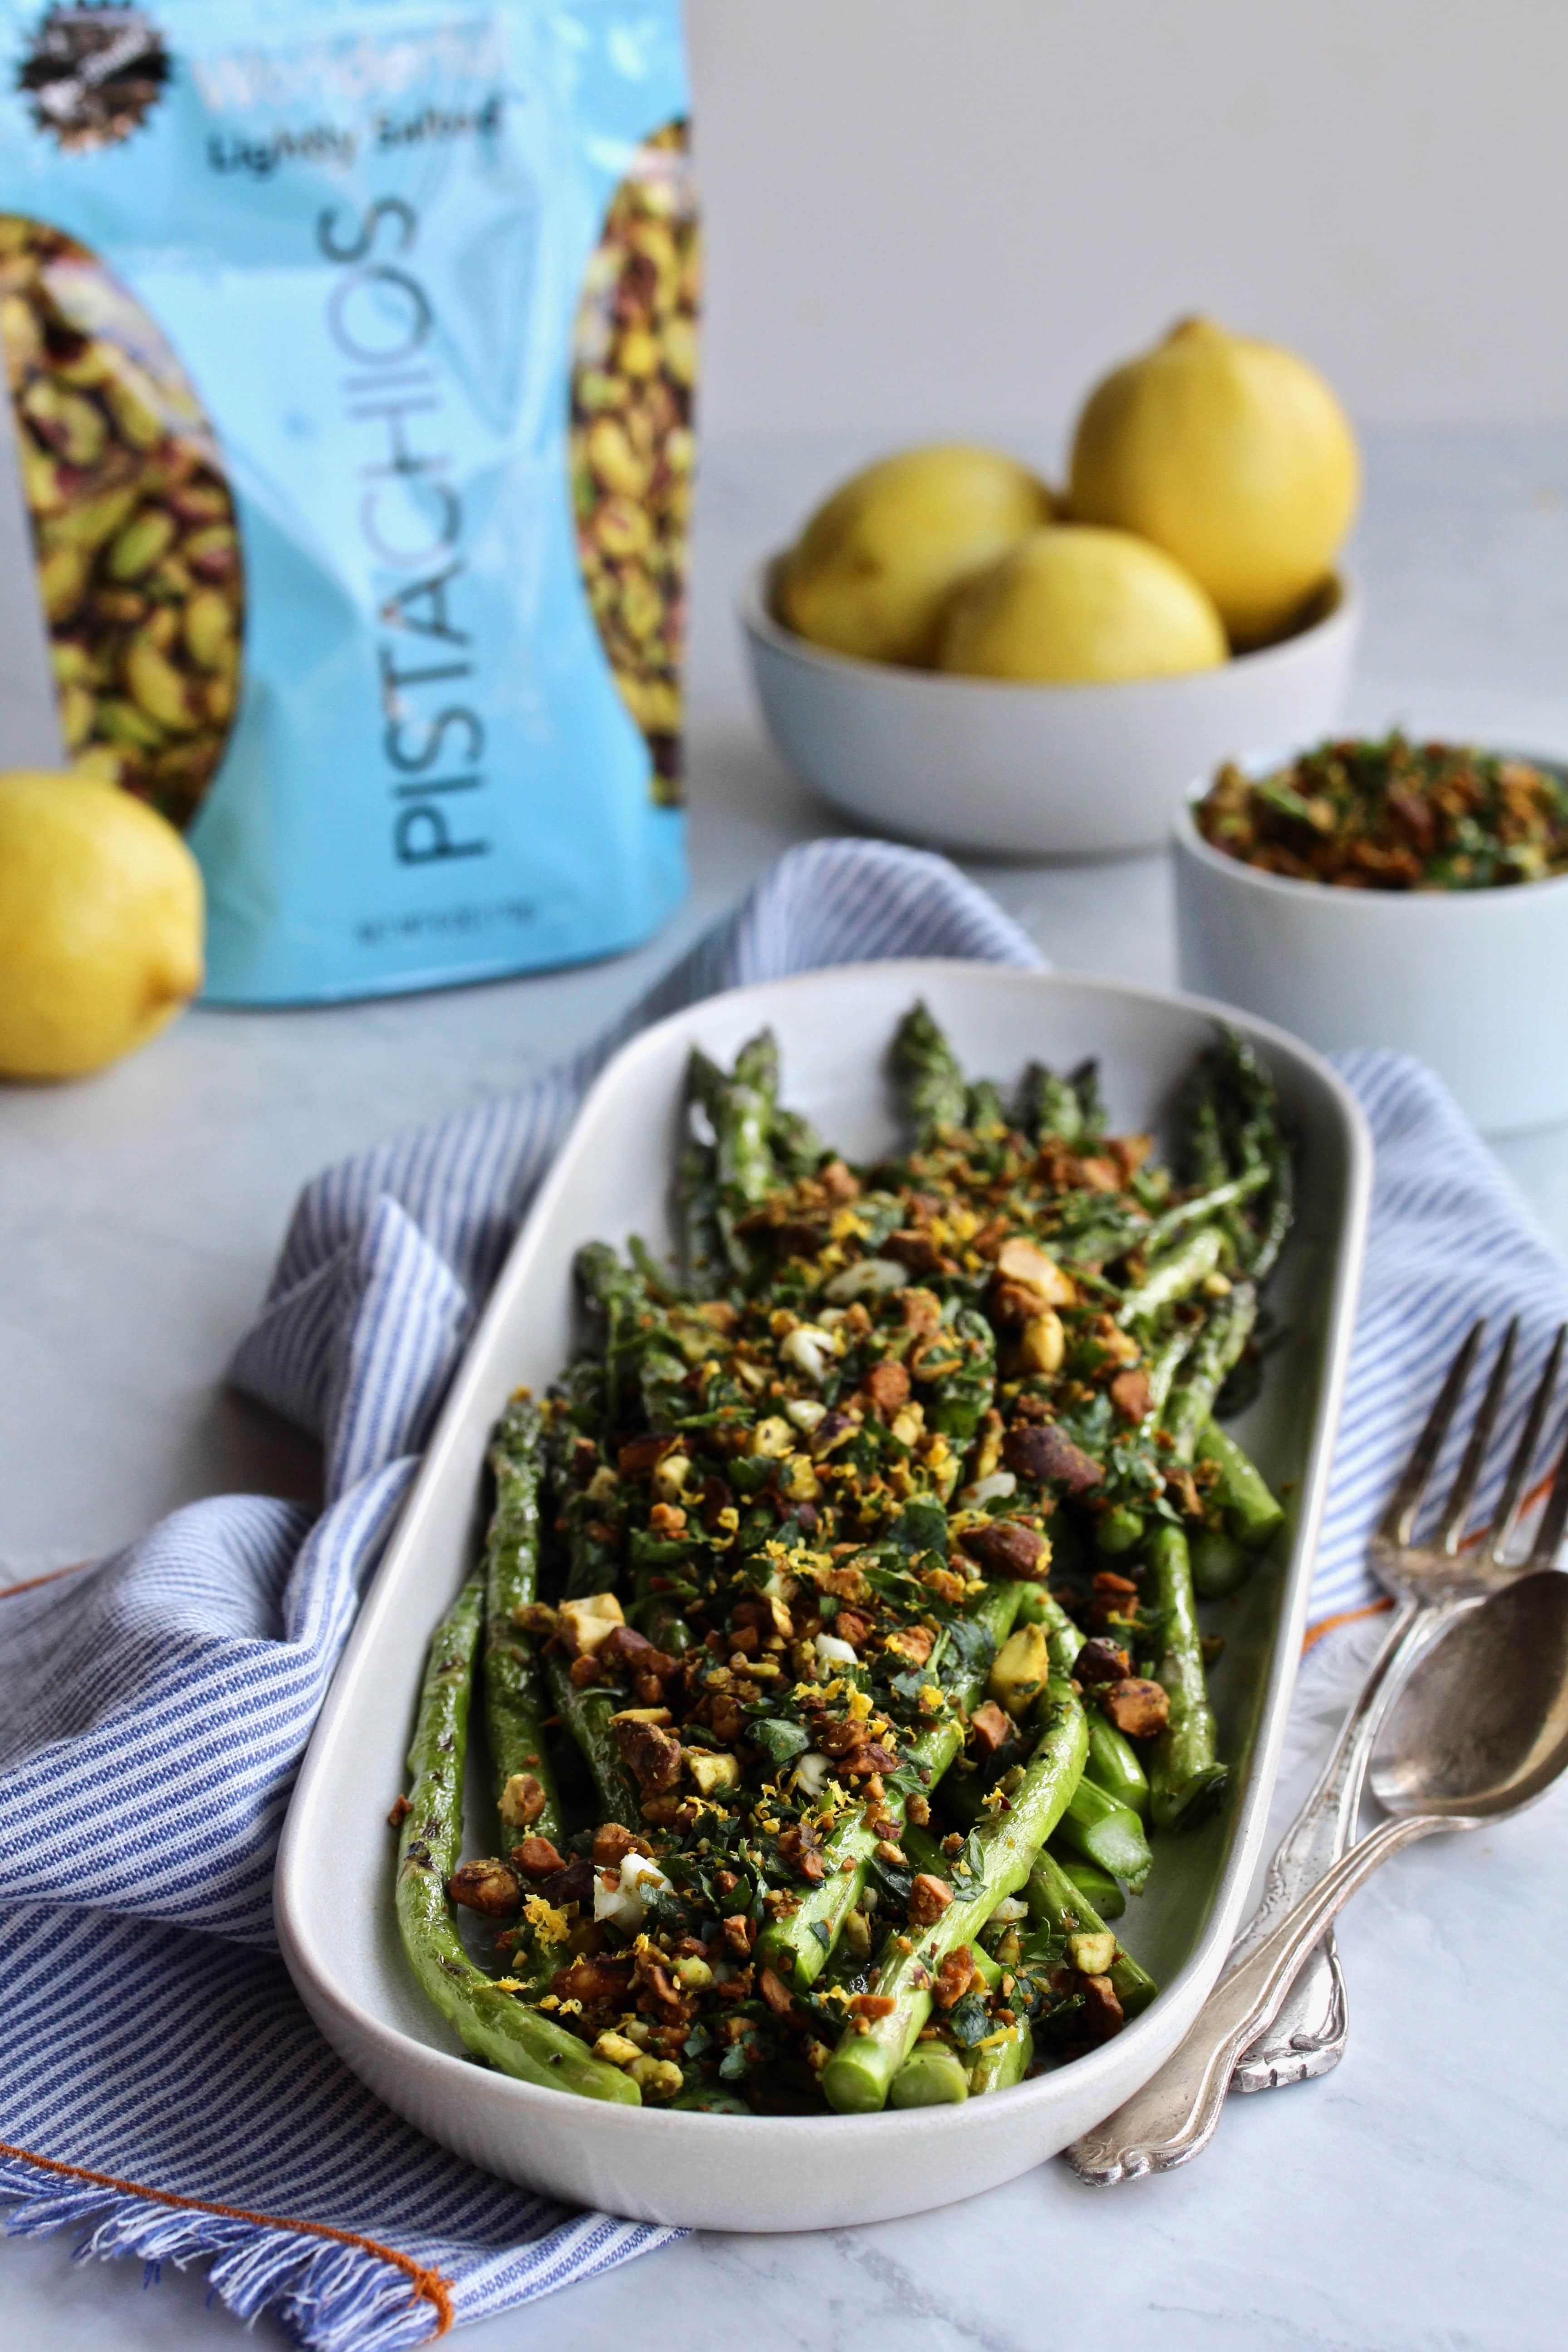 Links to Wonderful Pistachios Lemon Gremolata Over Grilled Asparagus recipe